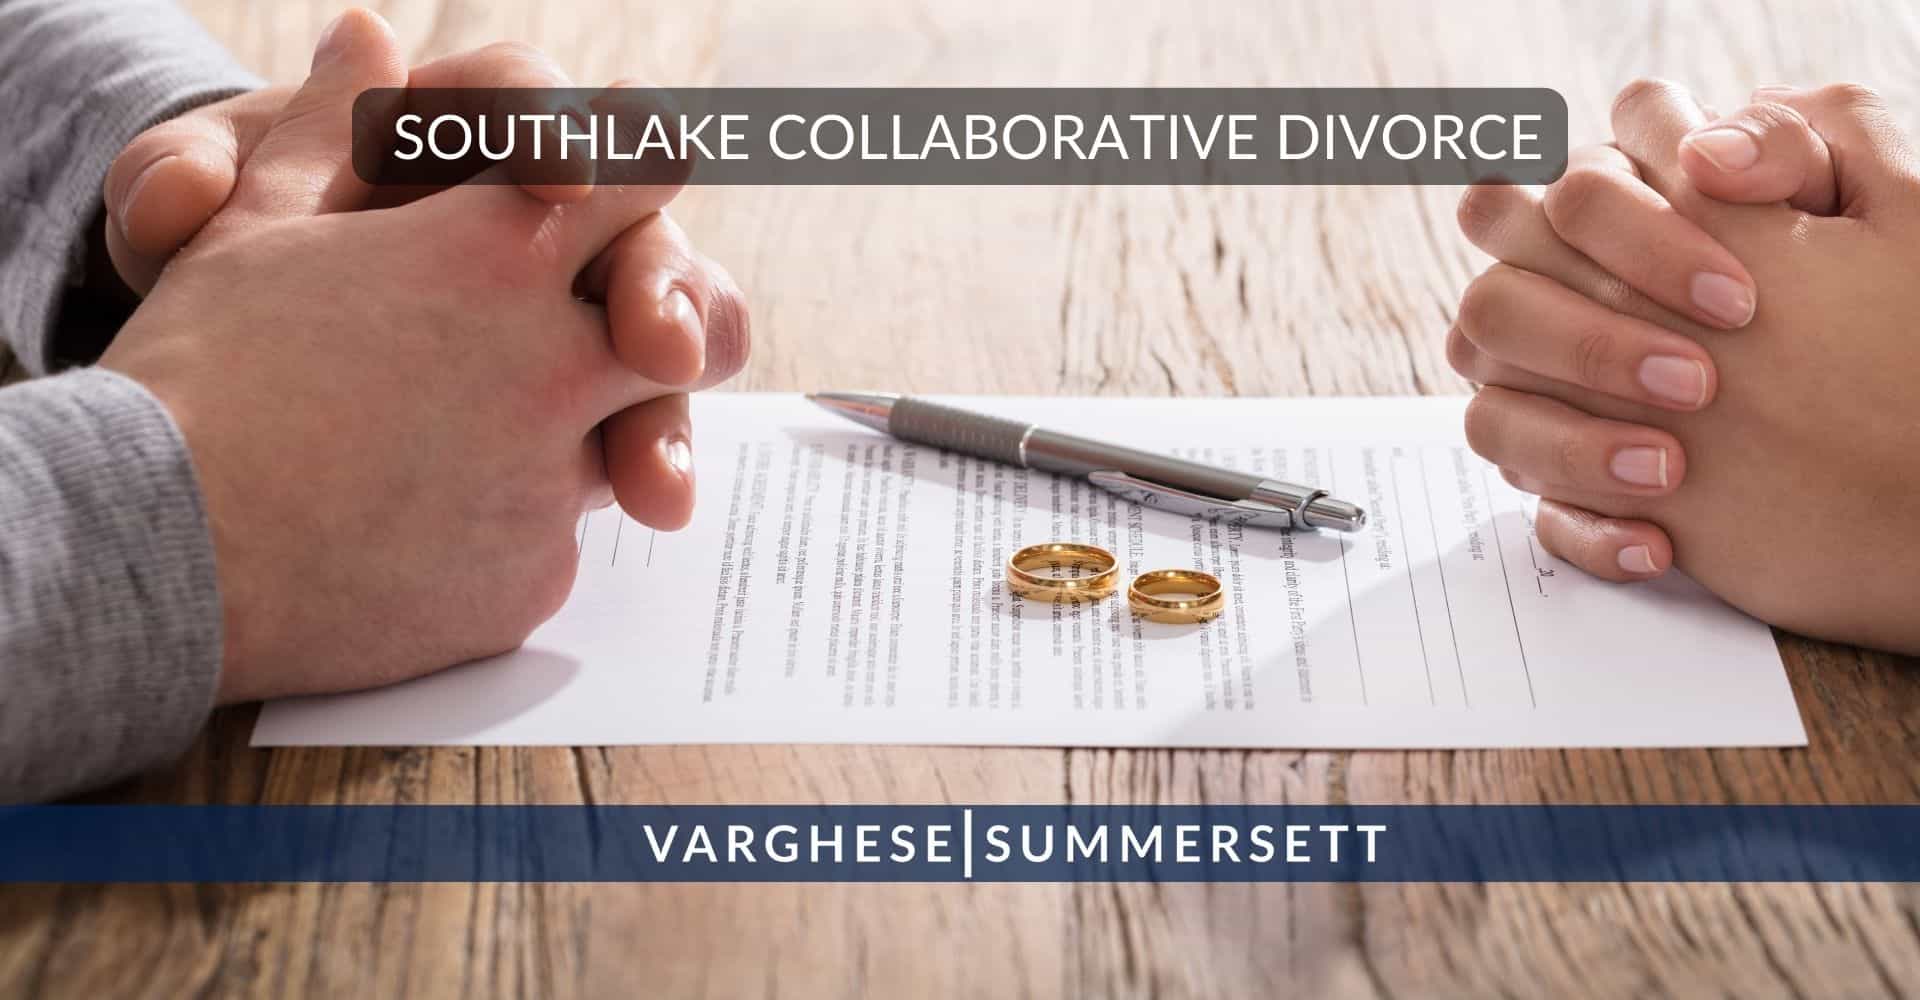 Southlake Collaborative Divorce